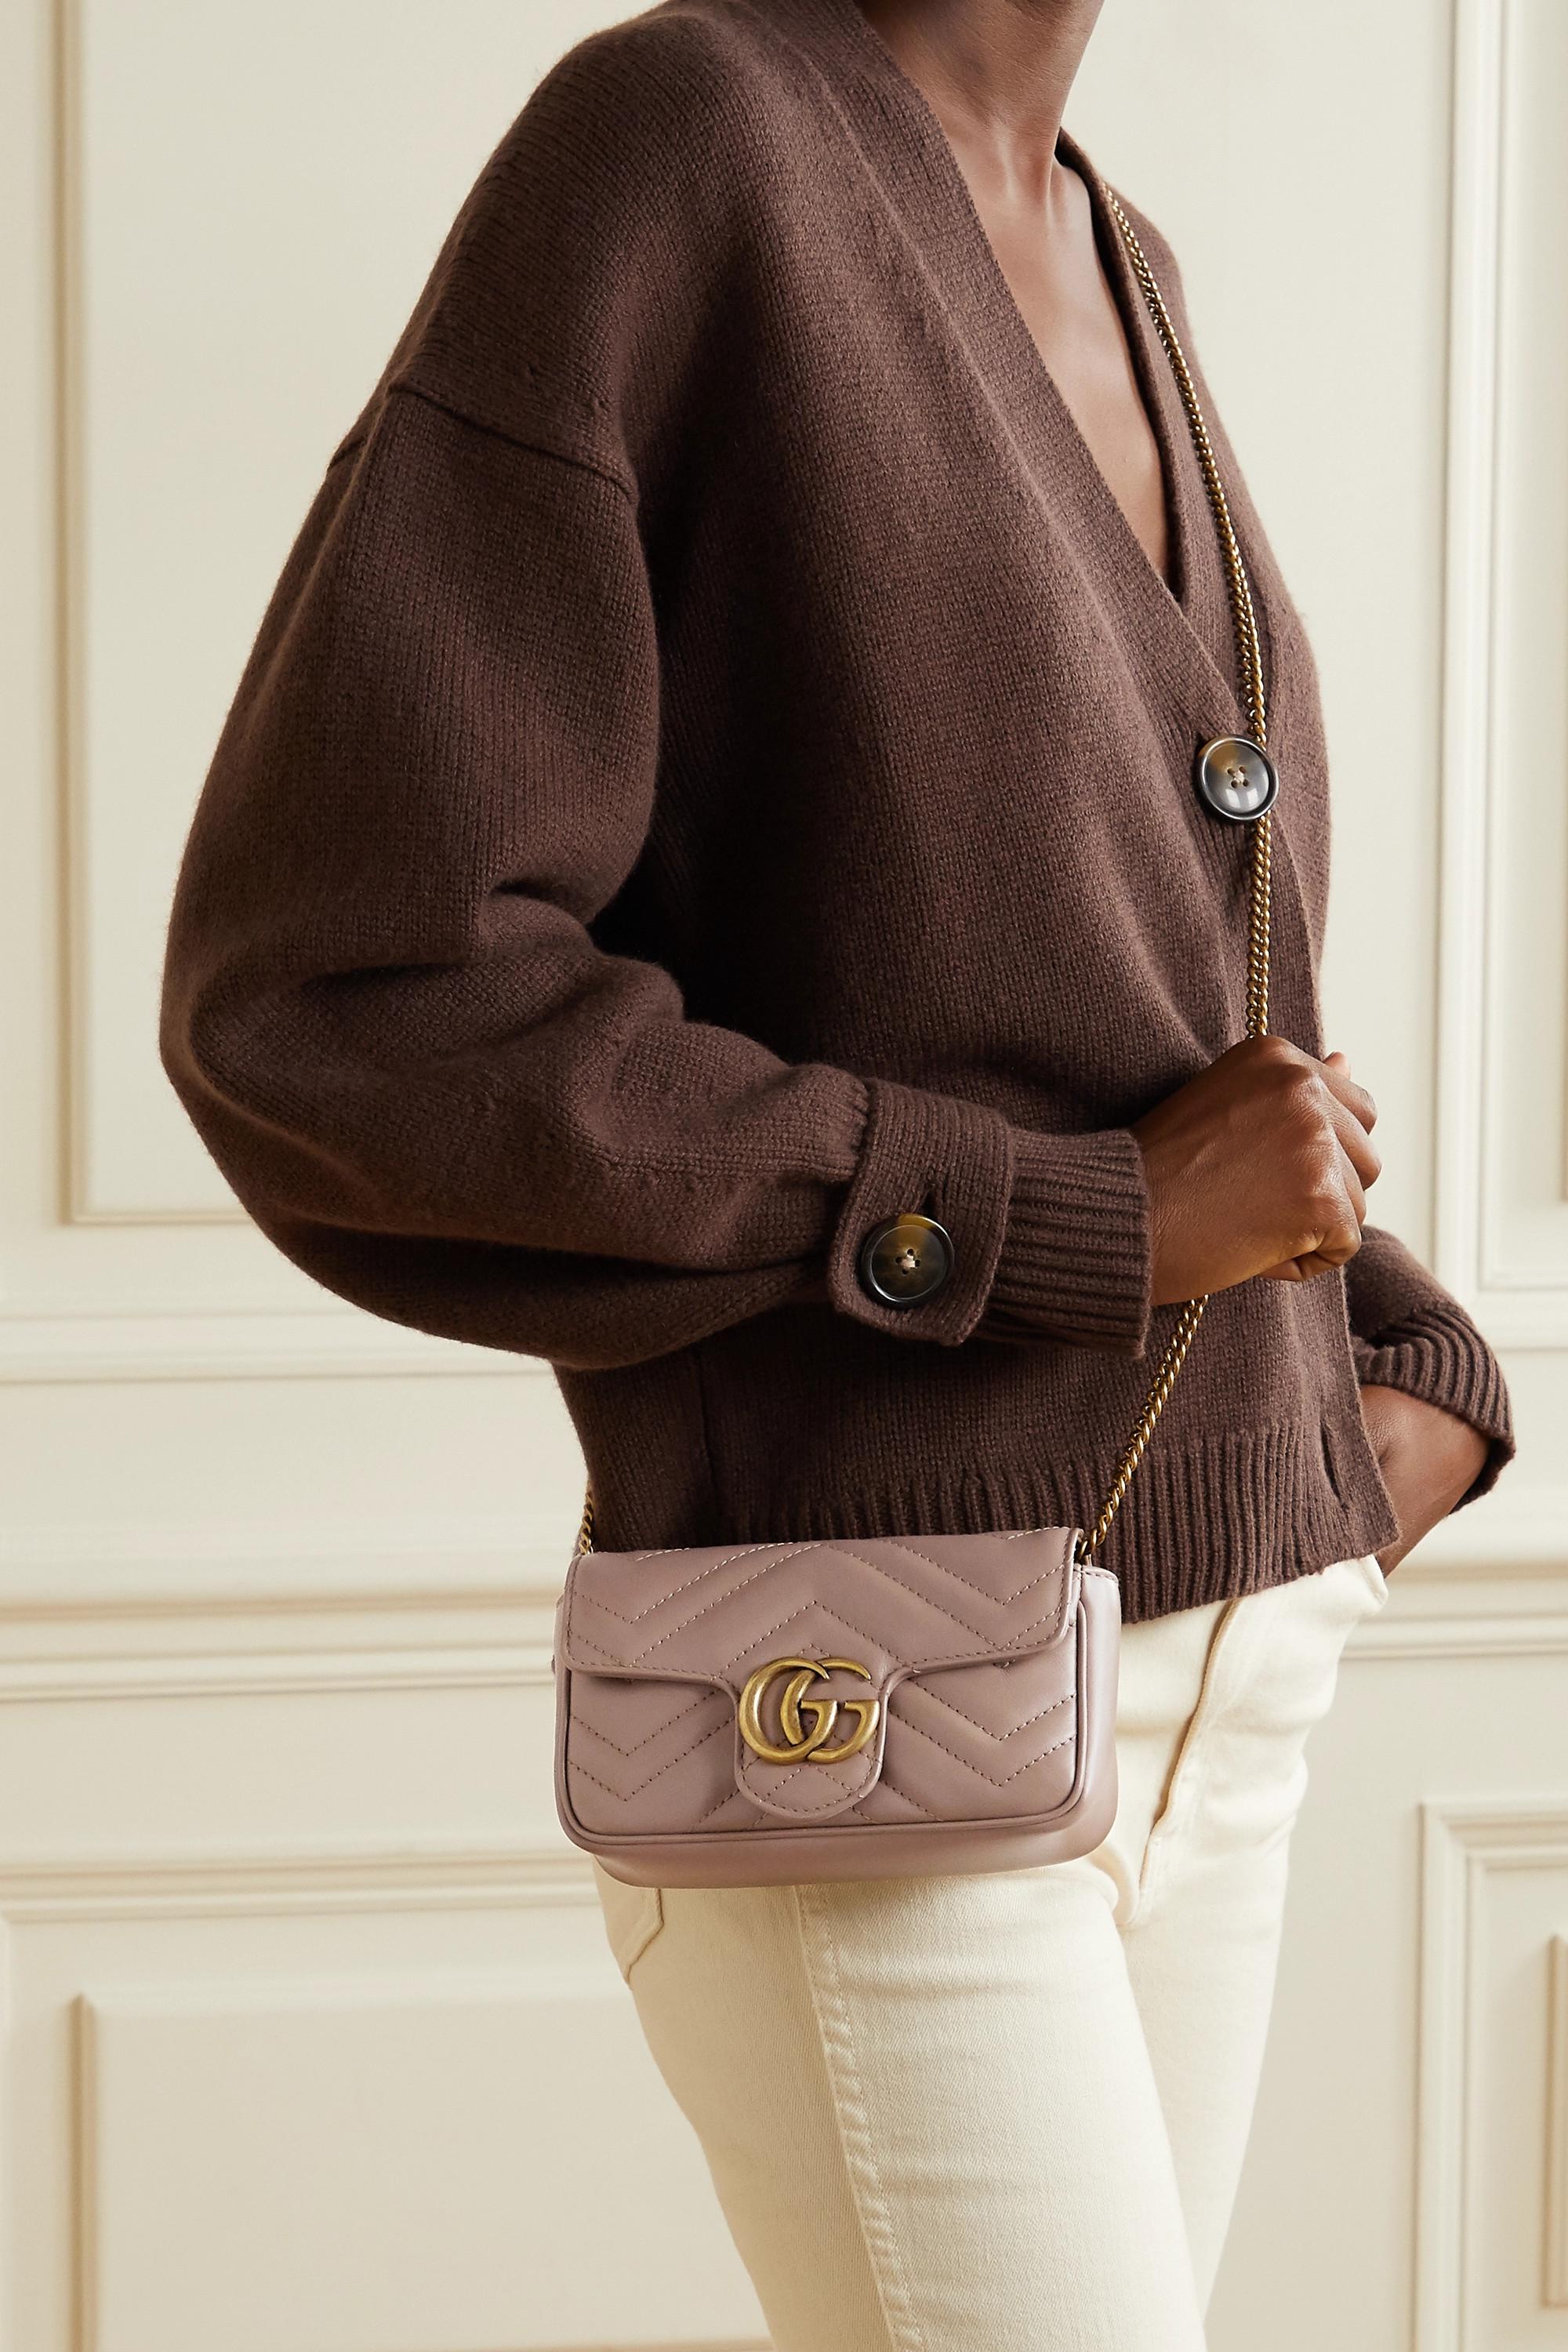 Gucci GG Marmont Matelassé Leather Super Mini Bag in Beige (Natural) - Save  27% - Lyst